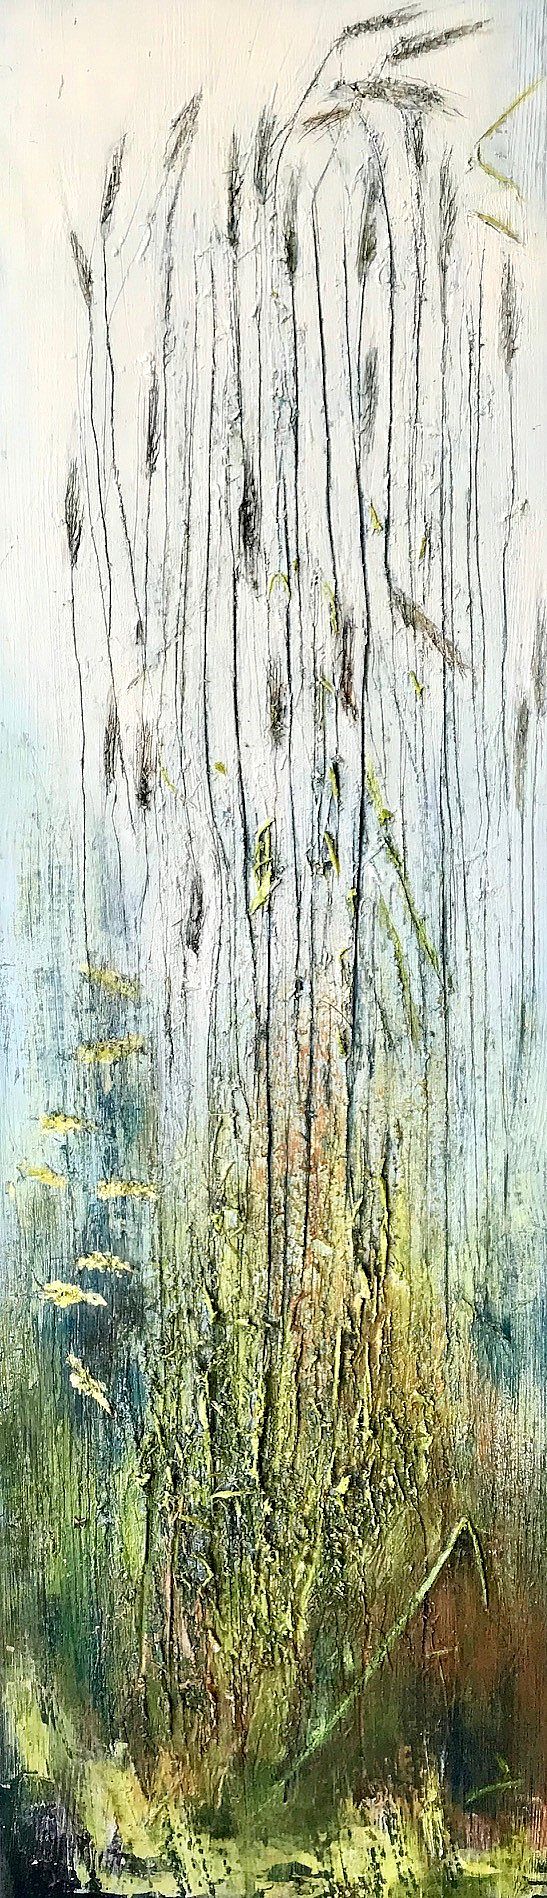 Morning meadow by Marika  Rosenius